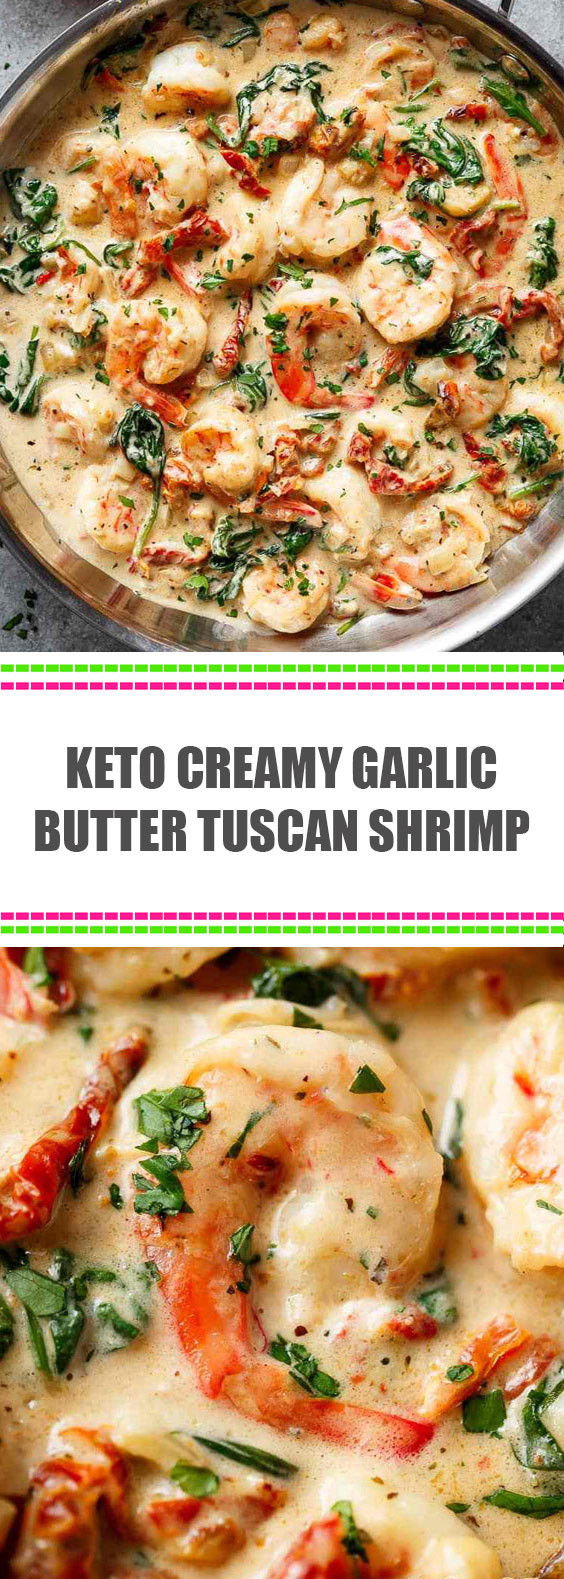 Tuscan Shrimp Keto
 Keto Creamy Garlic Butter Tuscan Shrimp